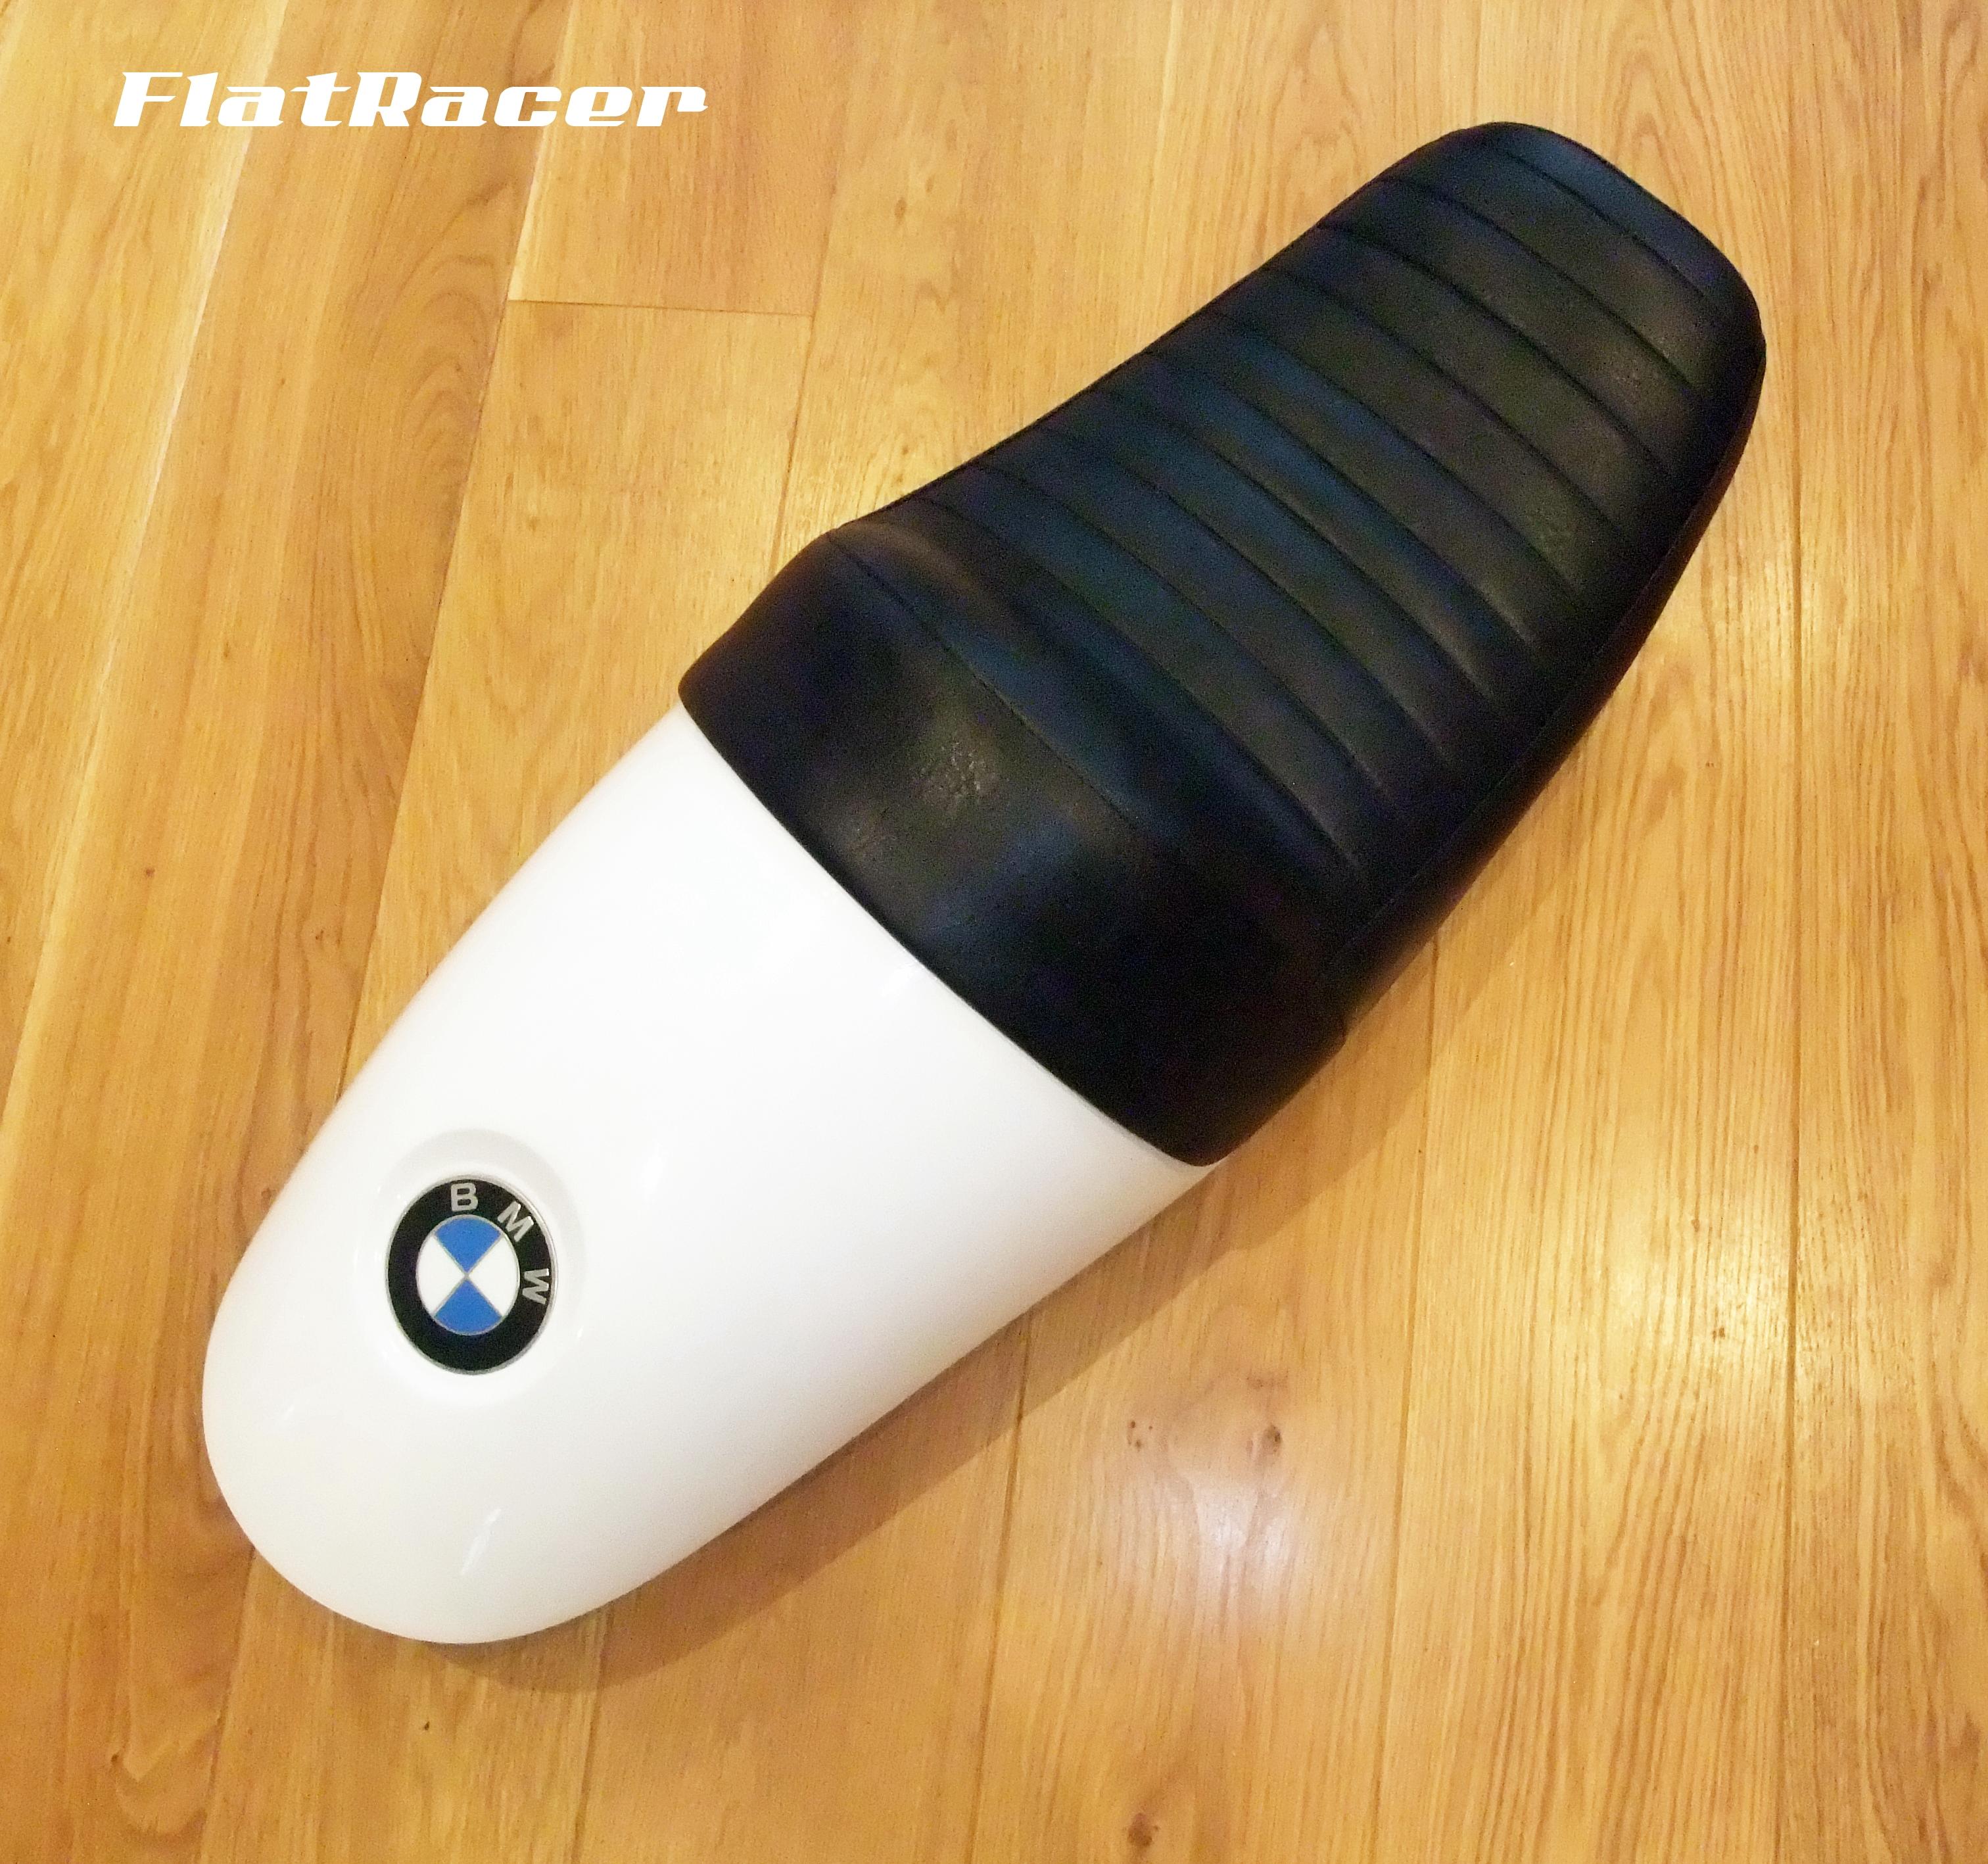 FlatRacer BMW Cafe Racer Solitude tail kit